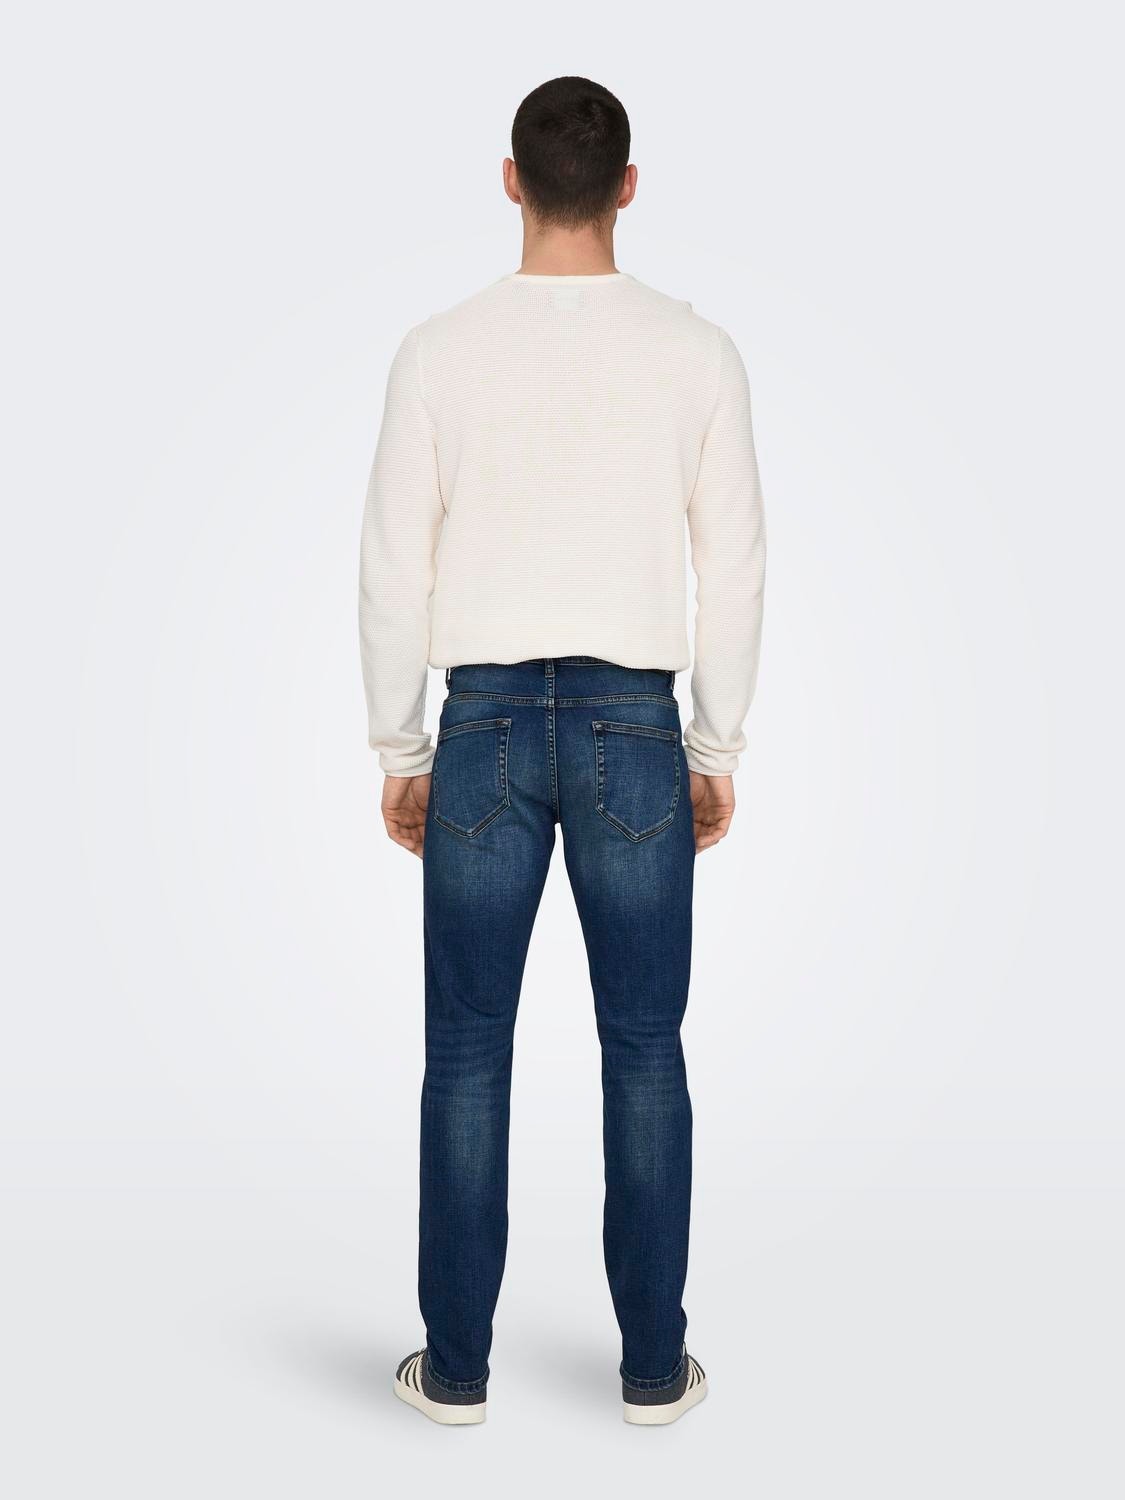 ONLY & SONS Jeans Slim Fit -Dark Medium Blue Denim - 22026817